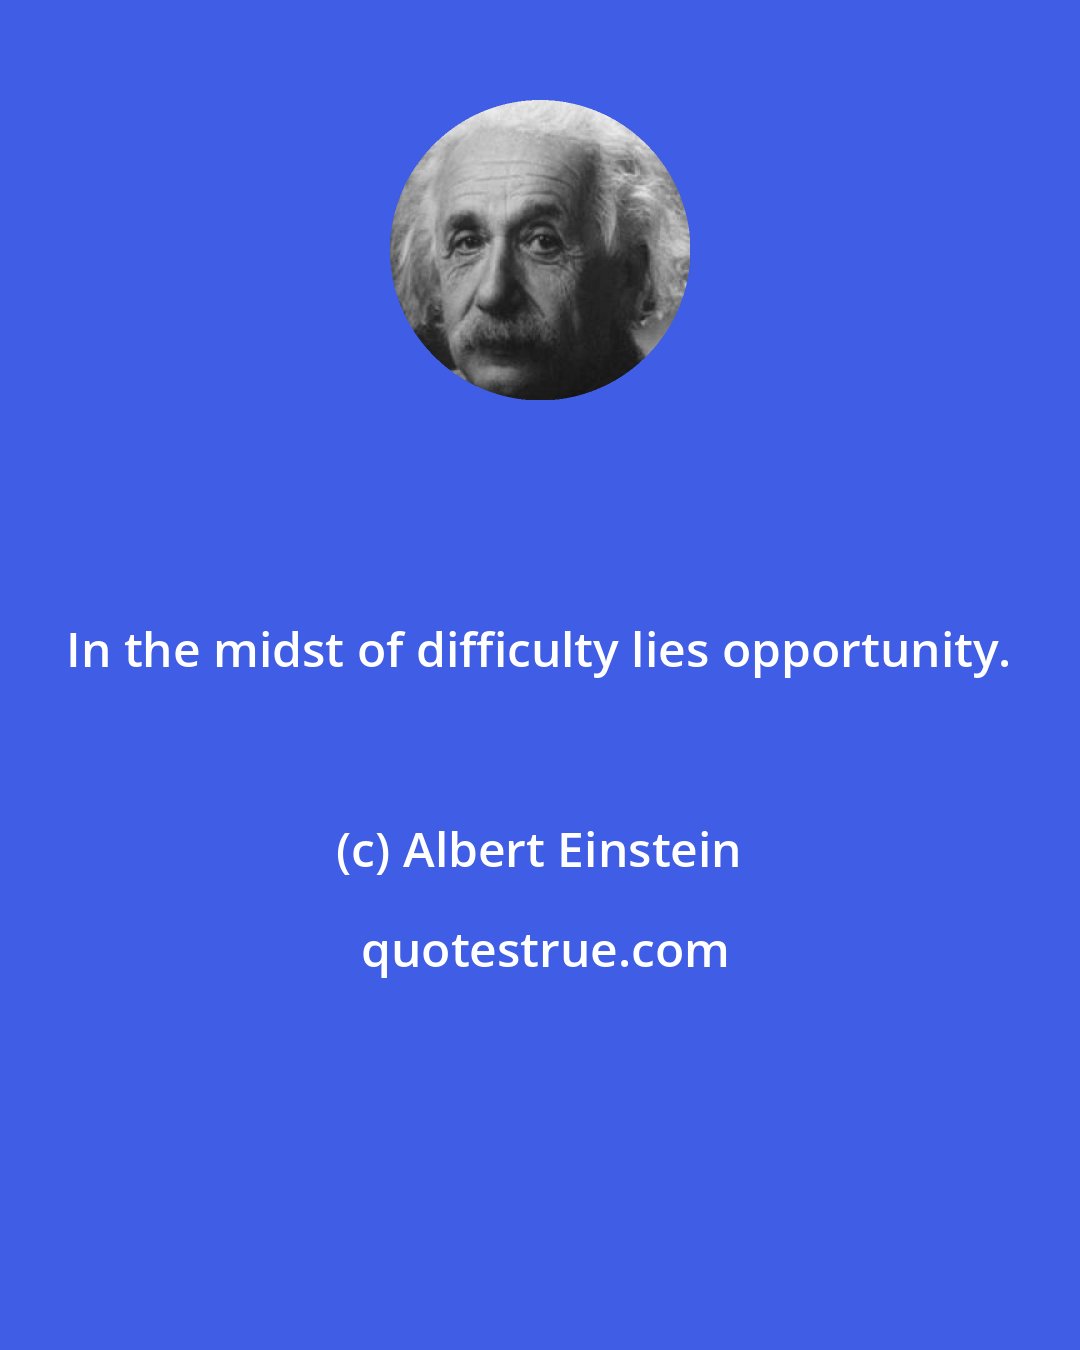 Albert Einstein: In the midst of difficulty lies opportunity.